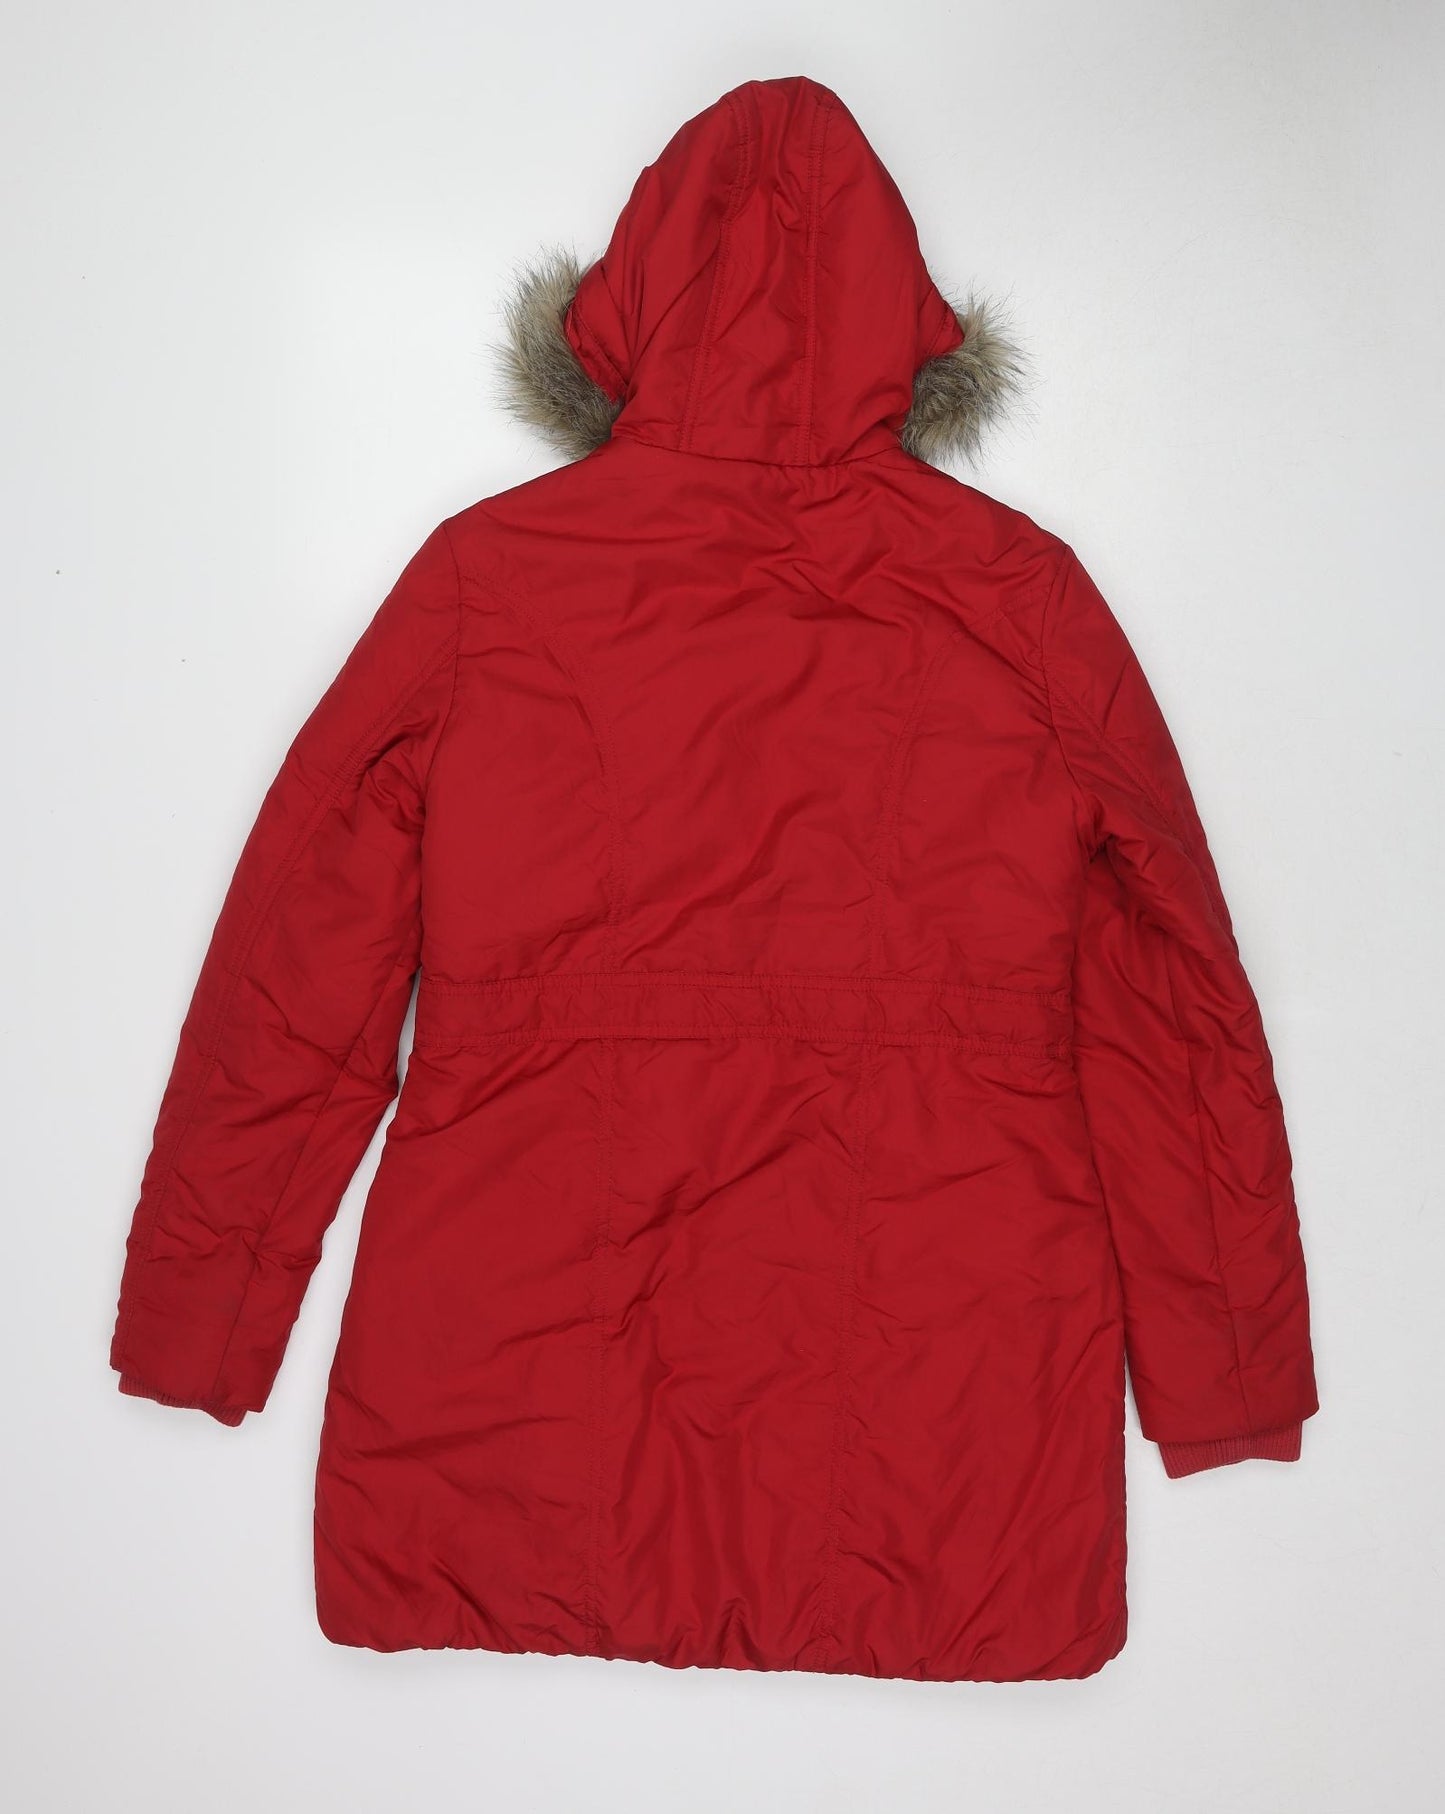 Indigo Girls Red Parka Coat Size 13-14 Years Zip